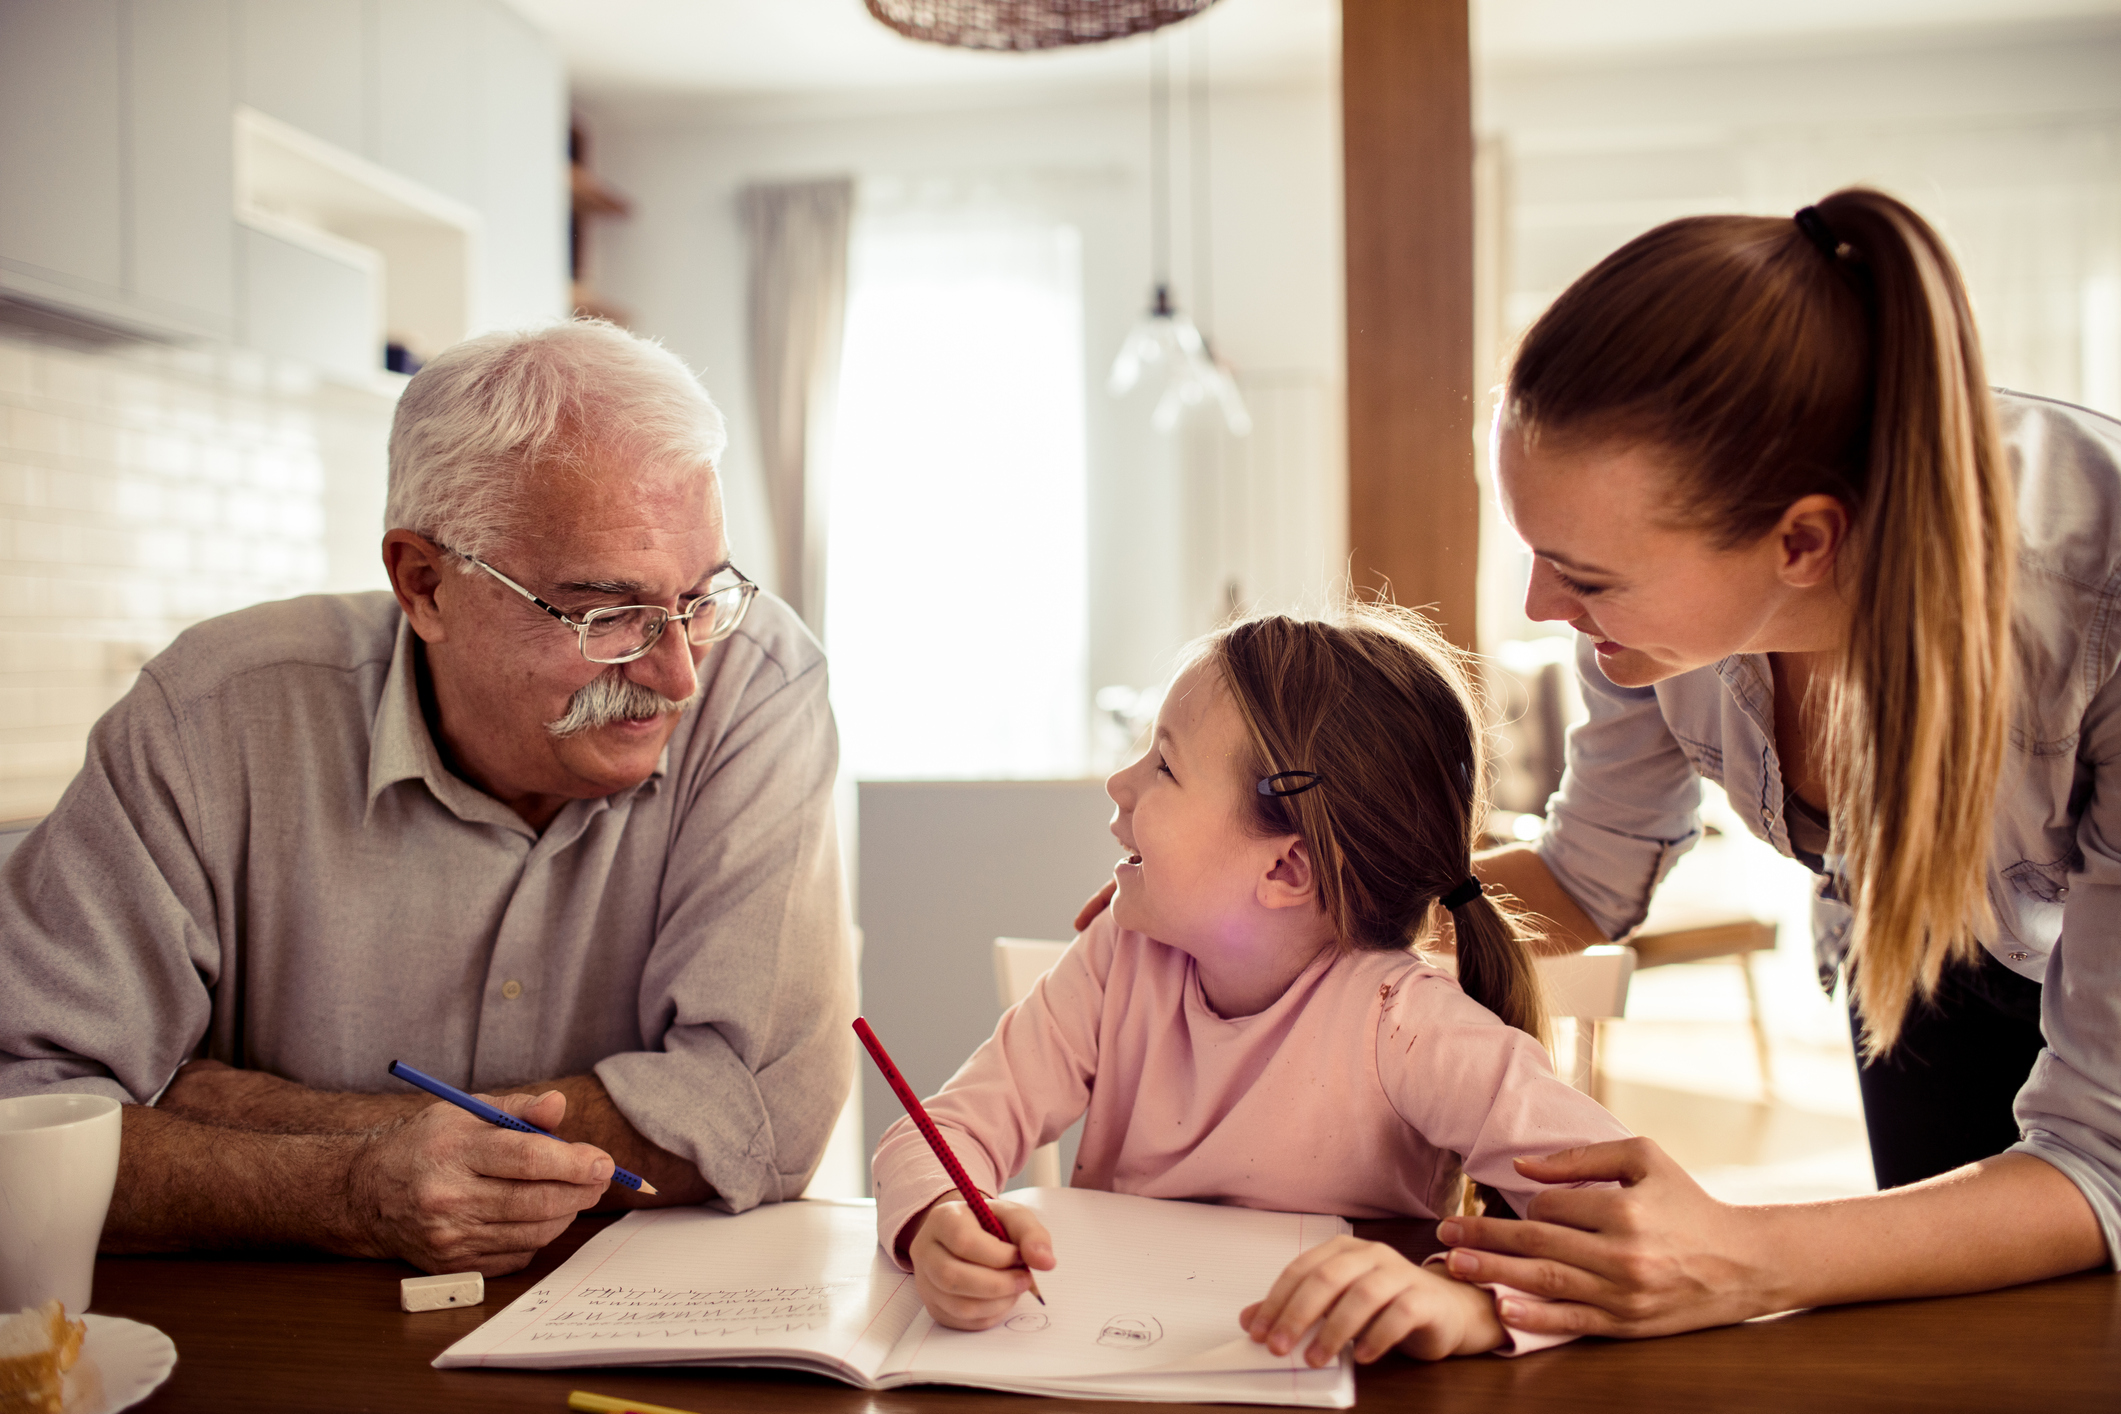 A grandfather and a mom help a little girl do homework.